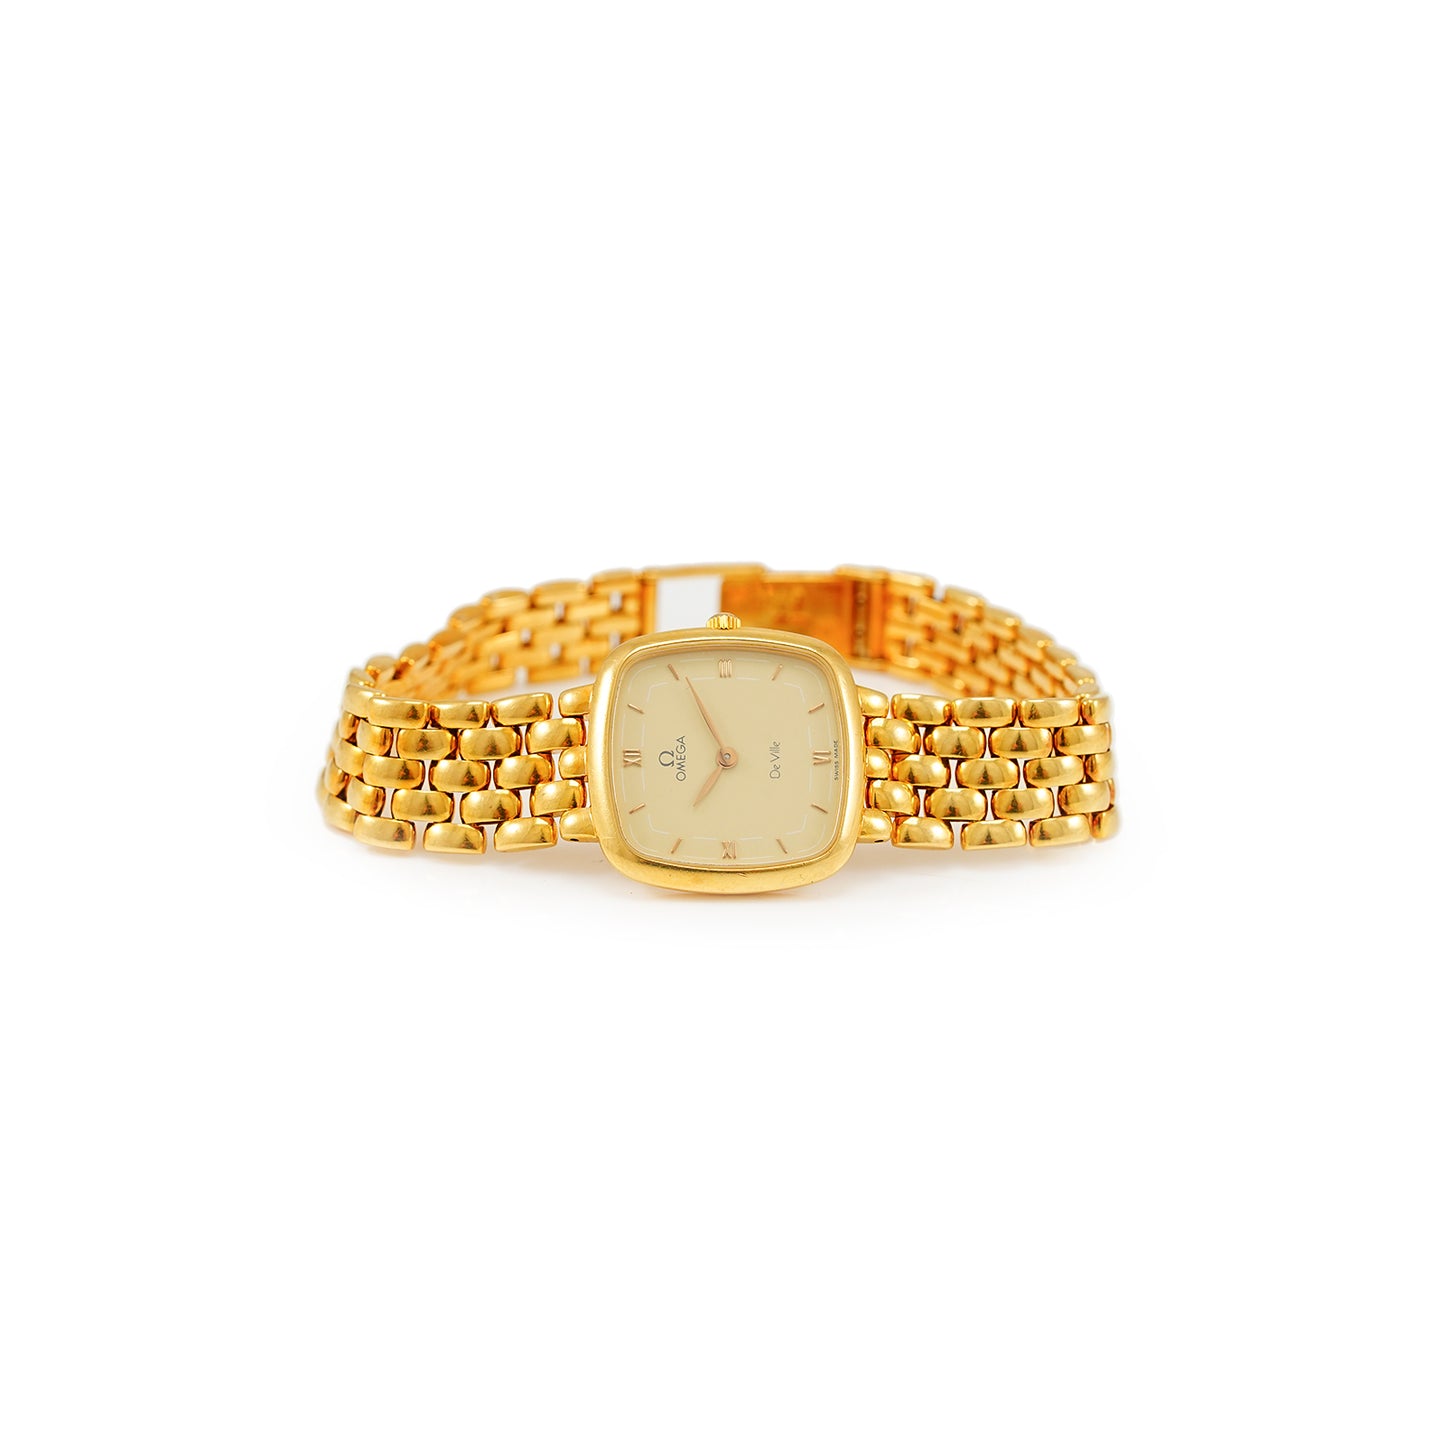 Vintage wristwatch Omega De Ville quartz 18K yellow gold women's watch 750 gold 5953111